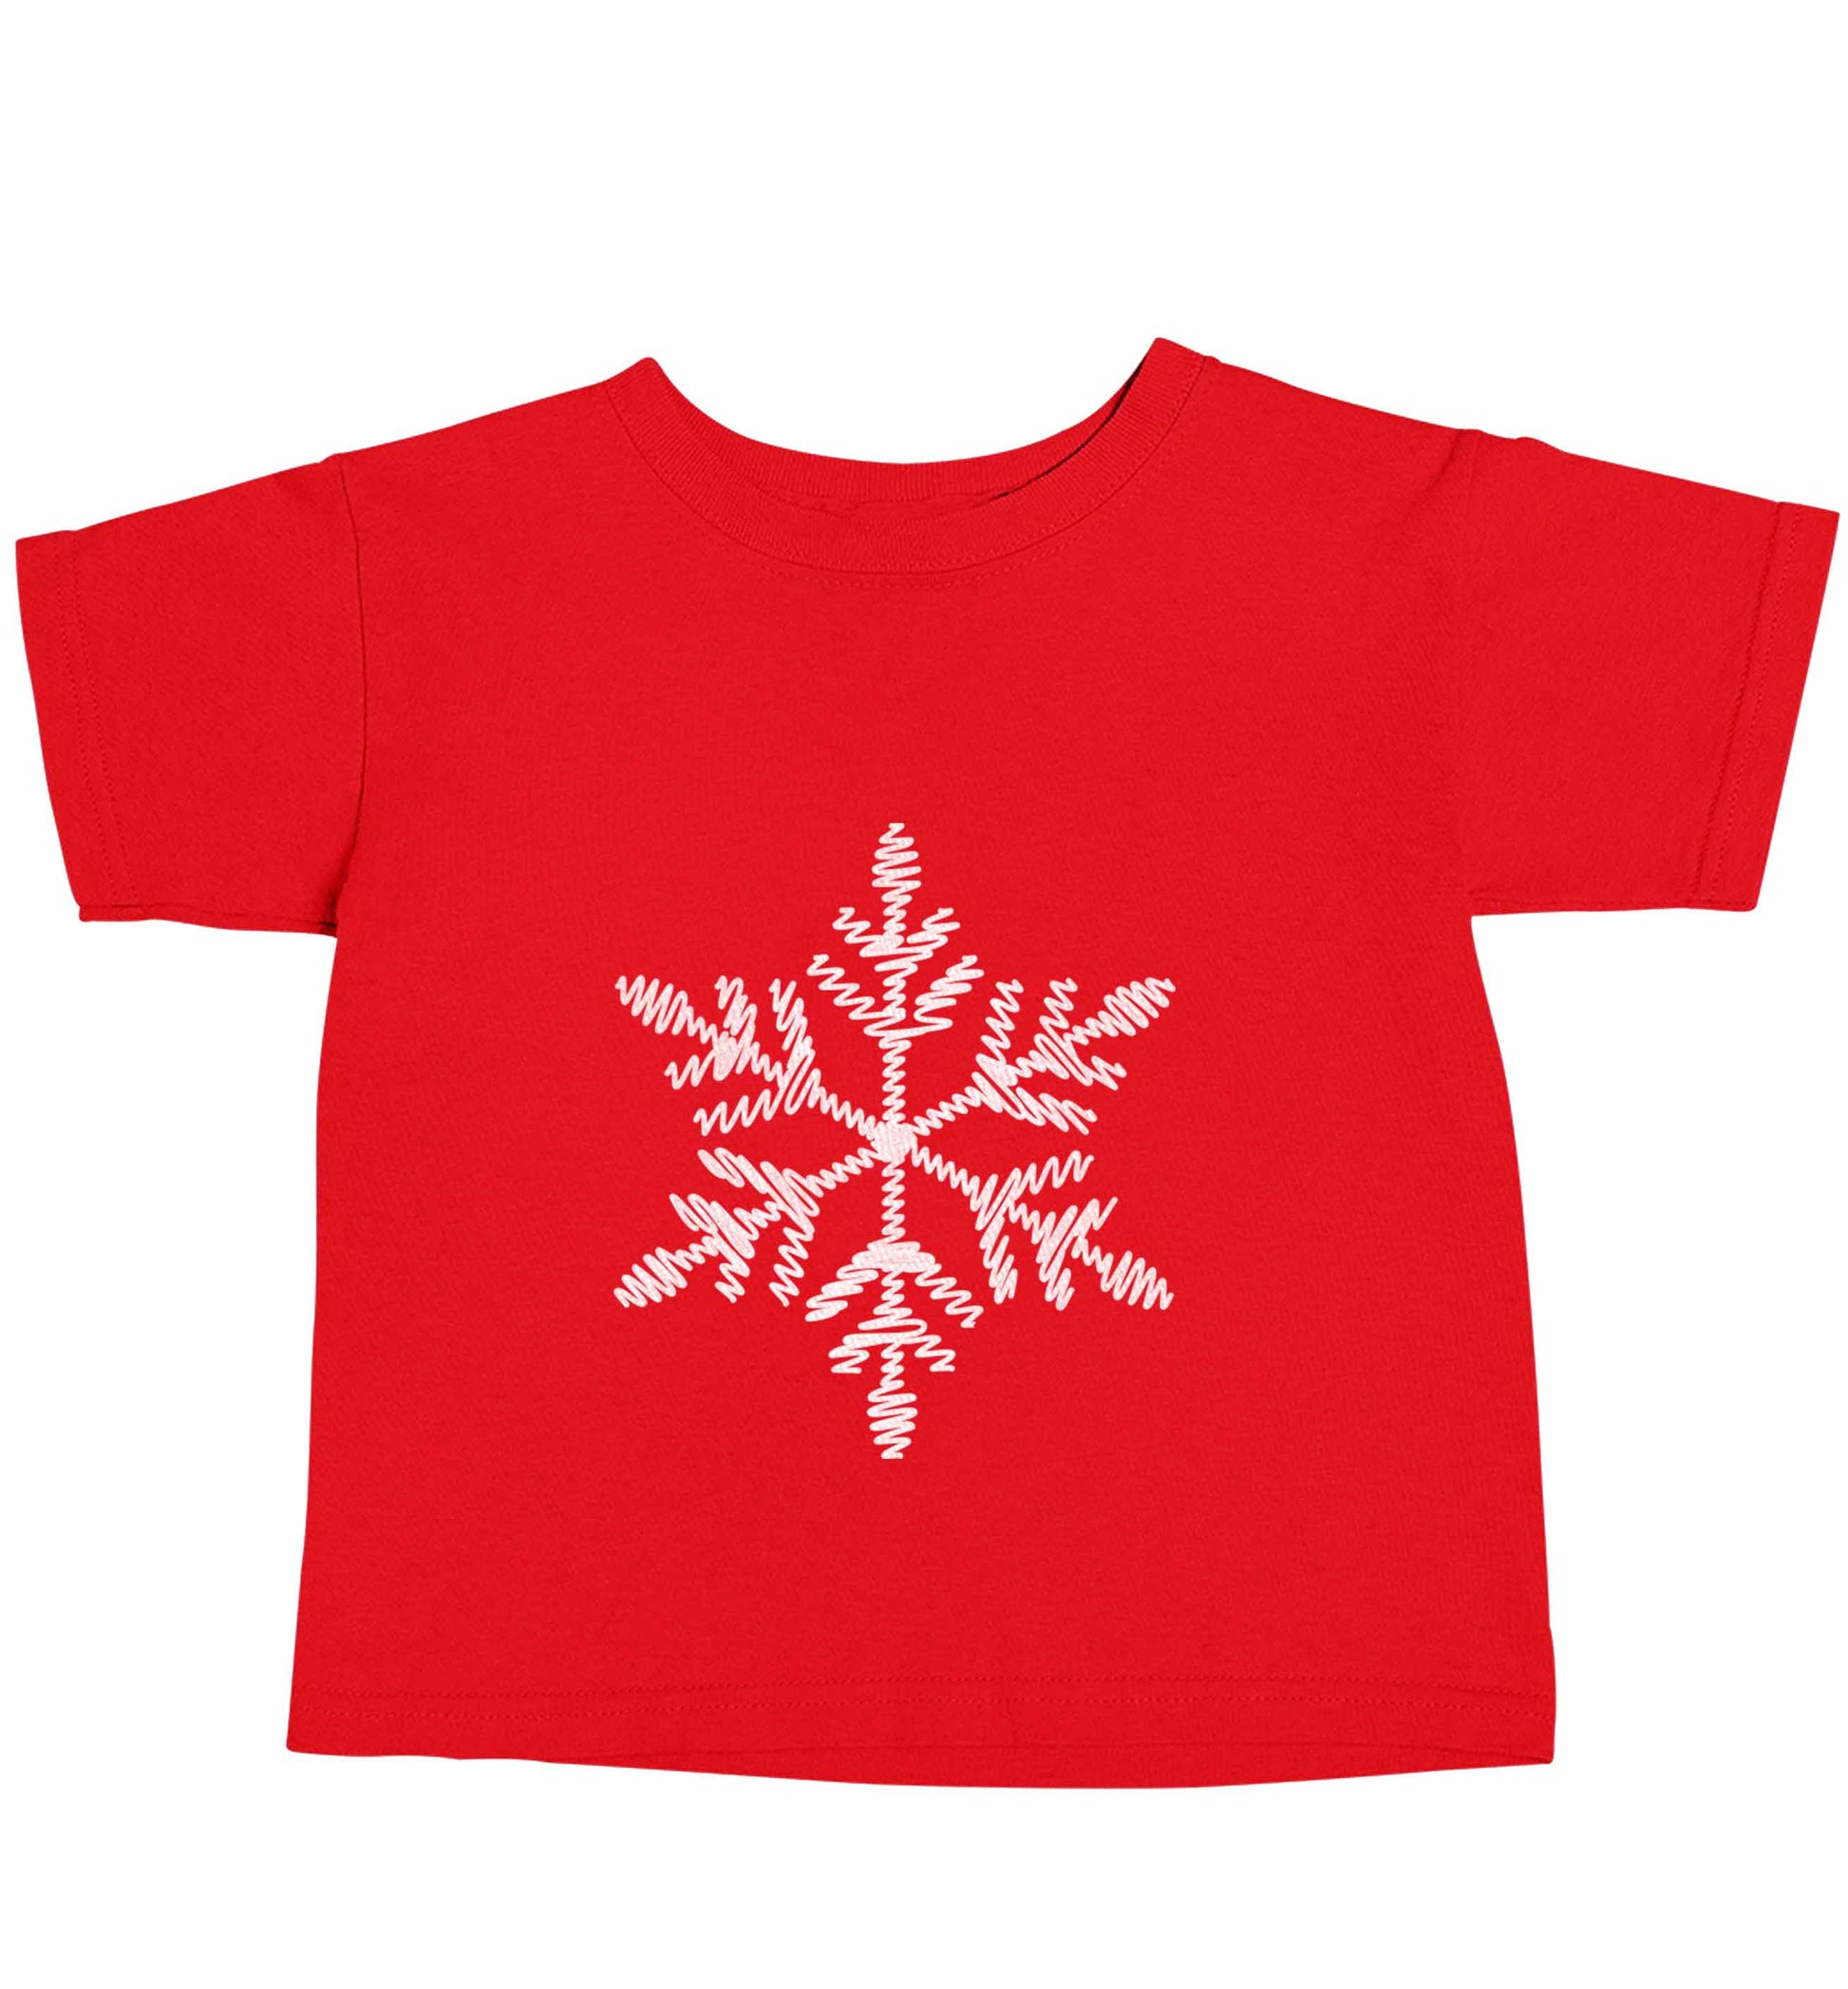 Snowflake red baby toddler Tshirt 2 Years